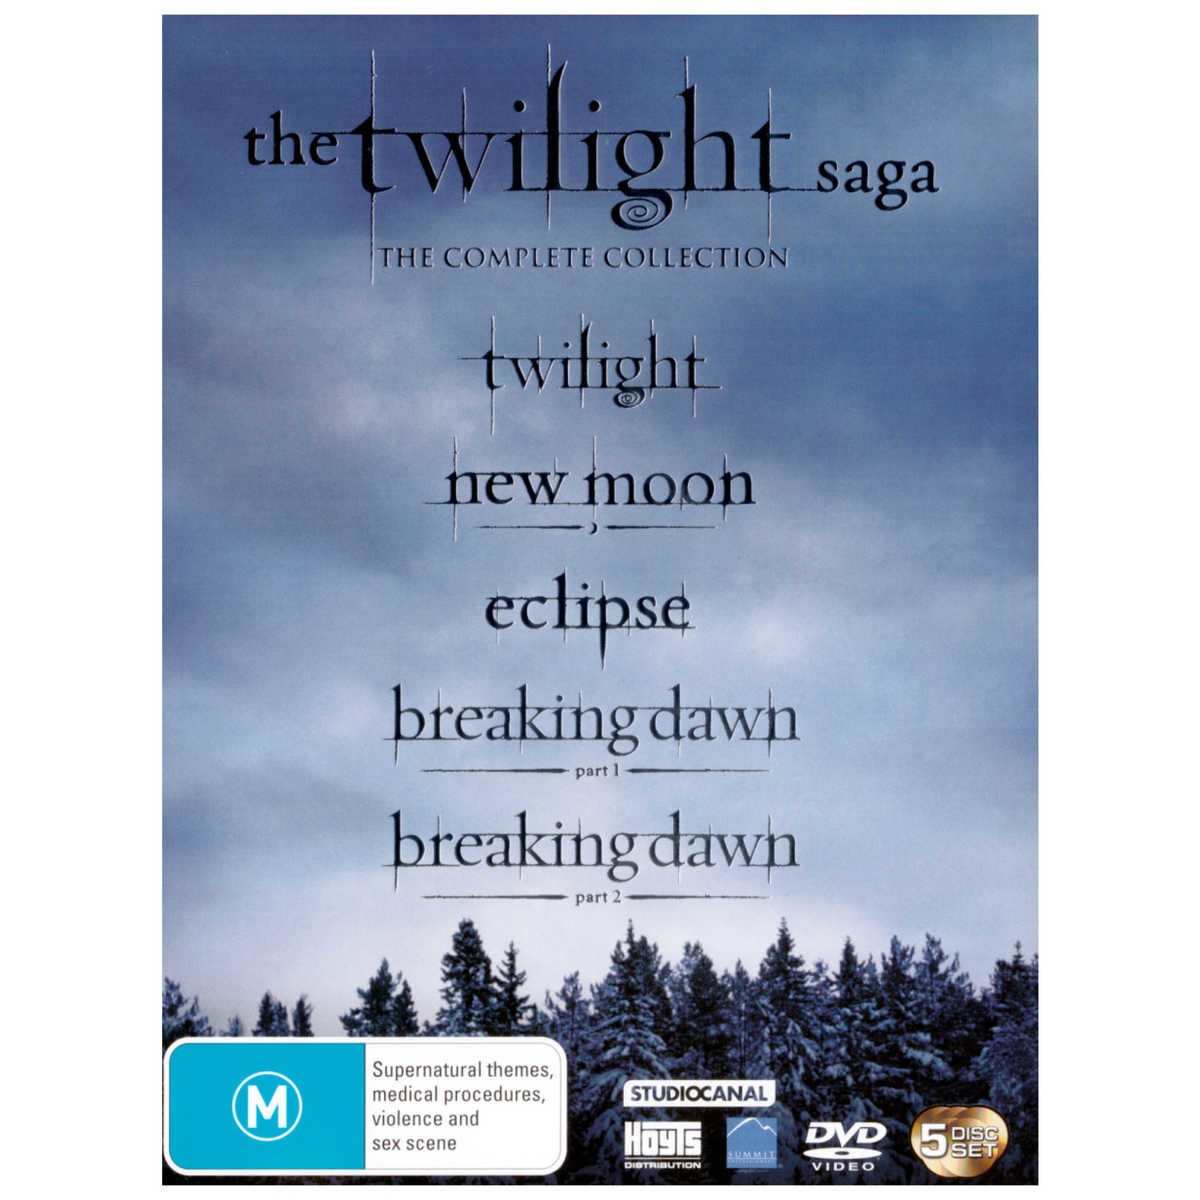 twilight saga movie collection